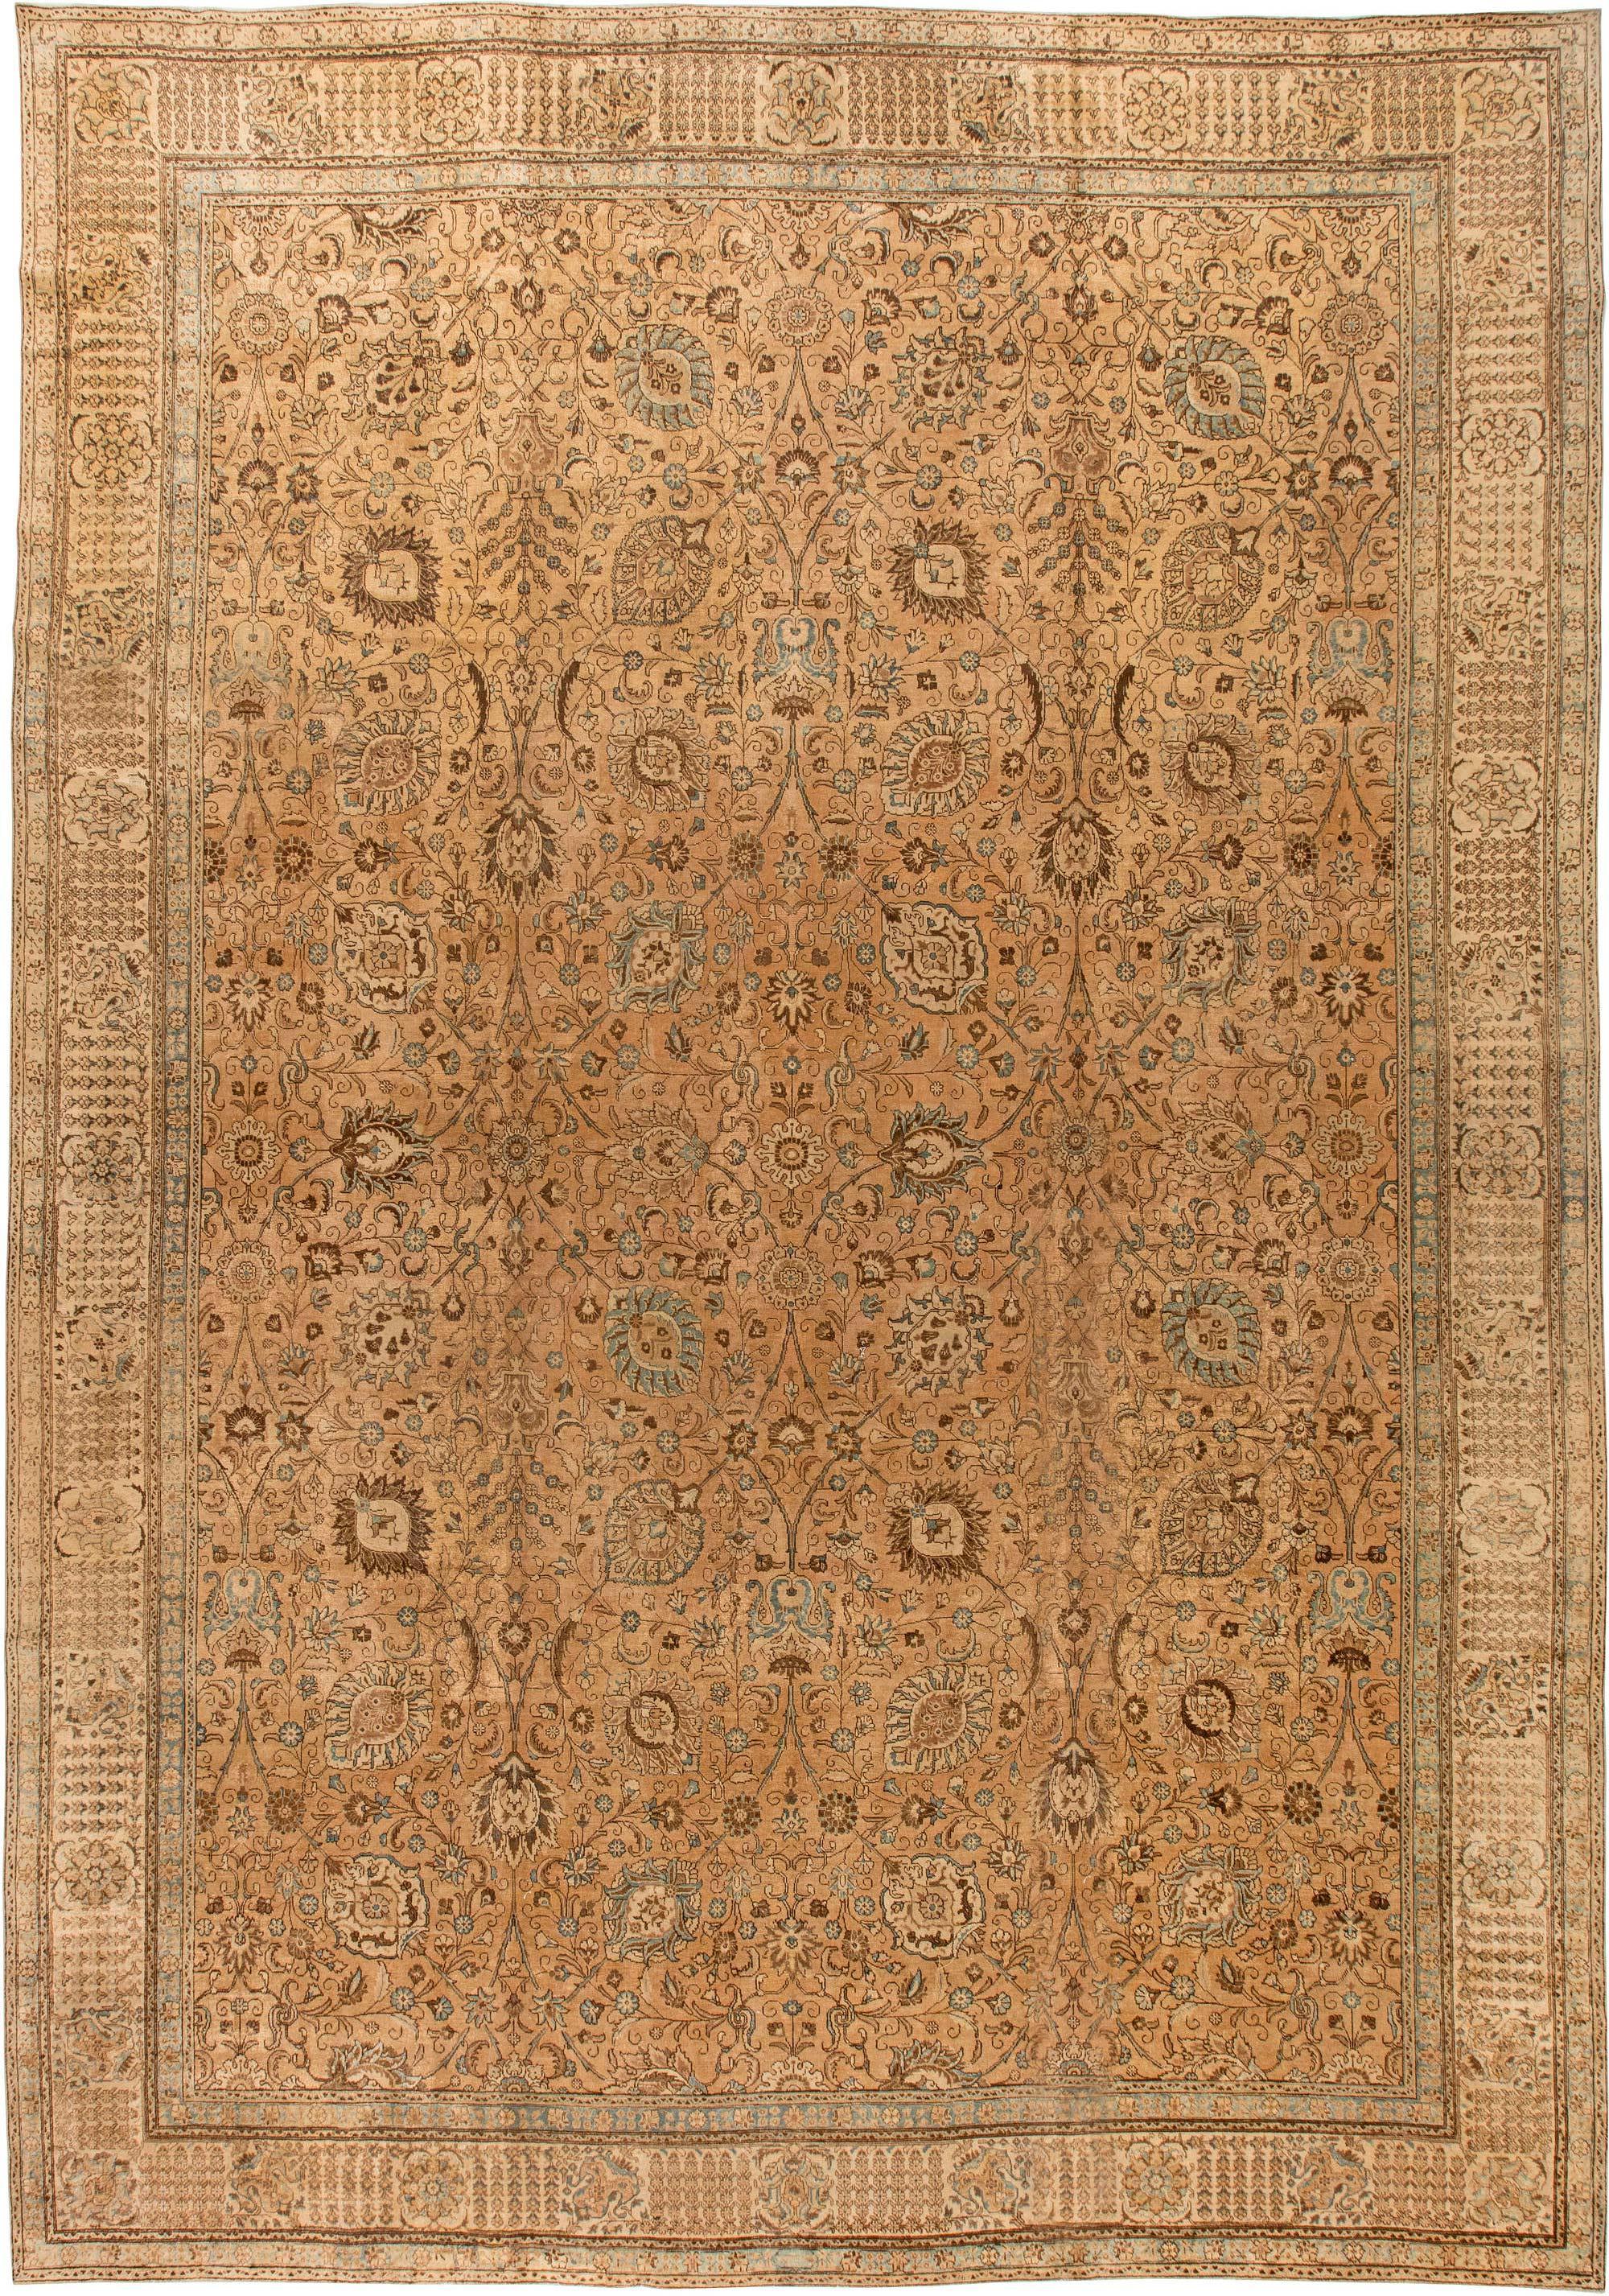 Authentic 19th Century Persian Tabriz Rug